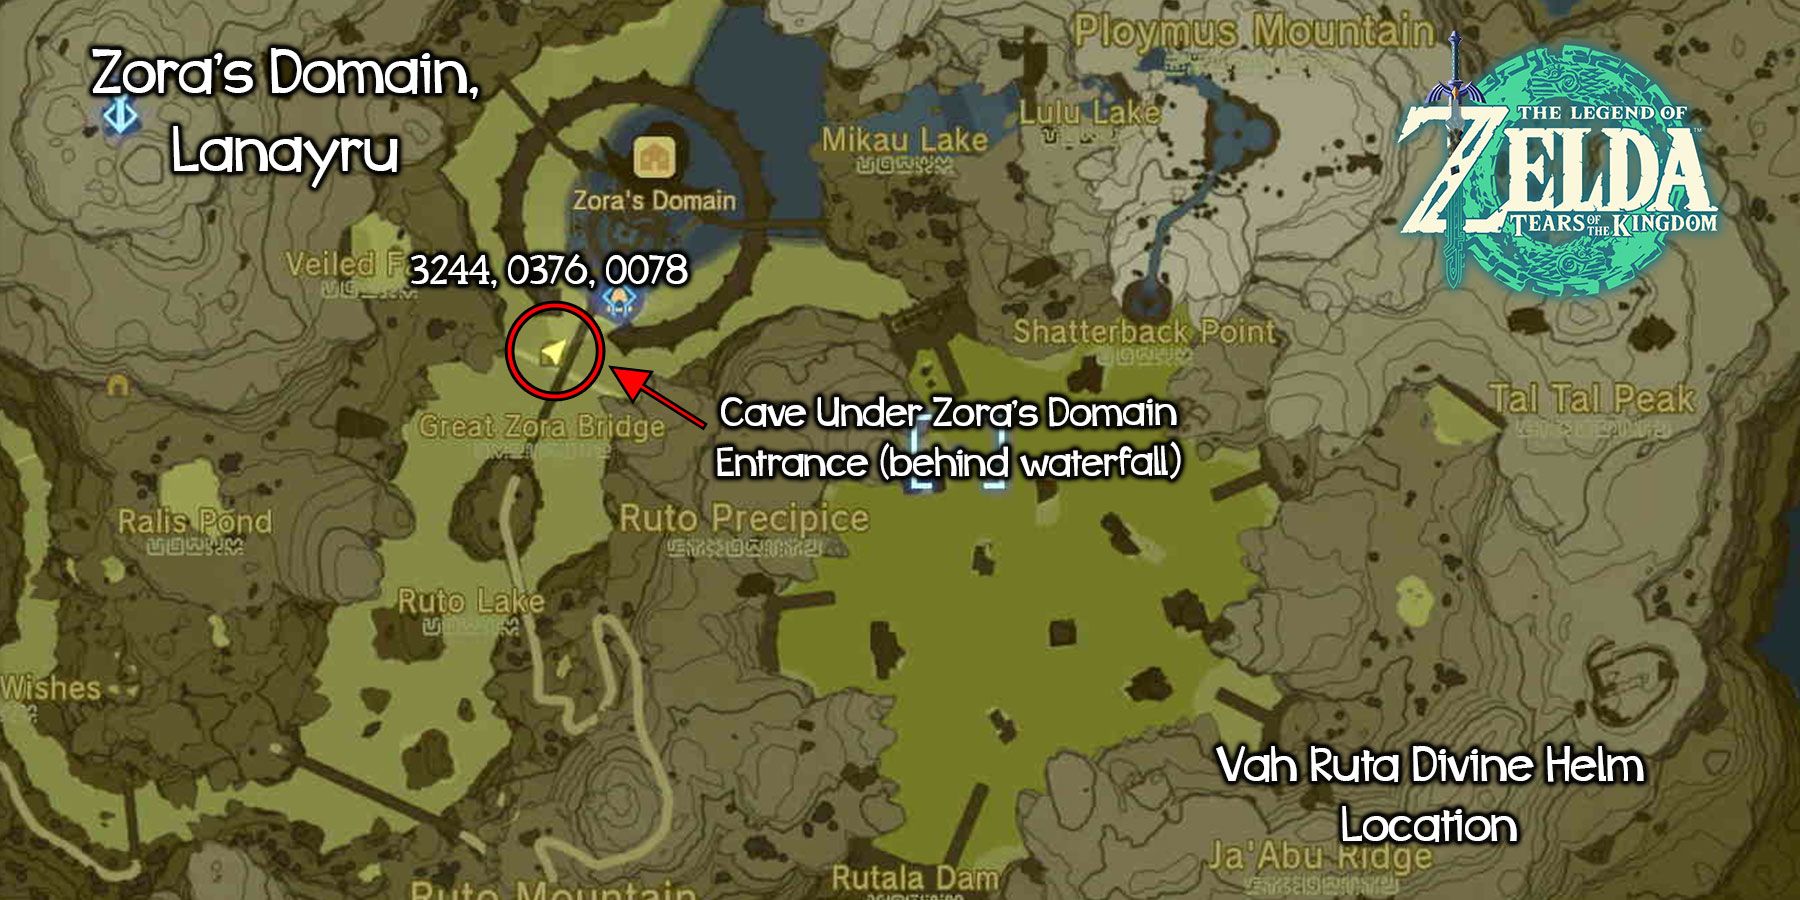 Vah Ruta Divine Helm cave location in Zelda: Tears of the Kingdom.